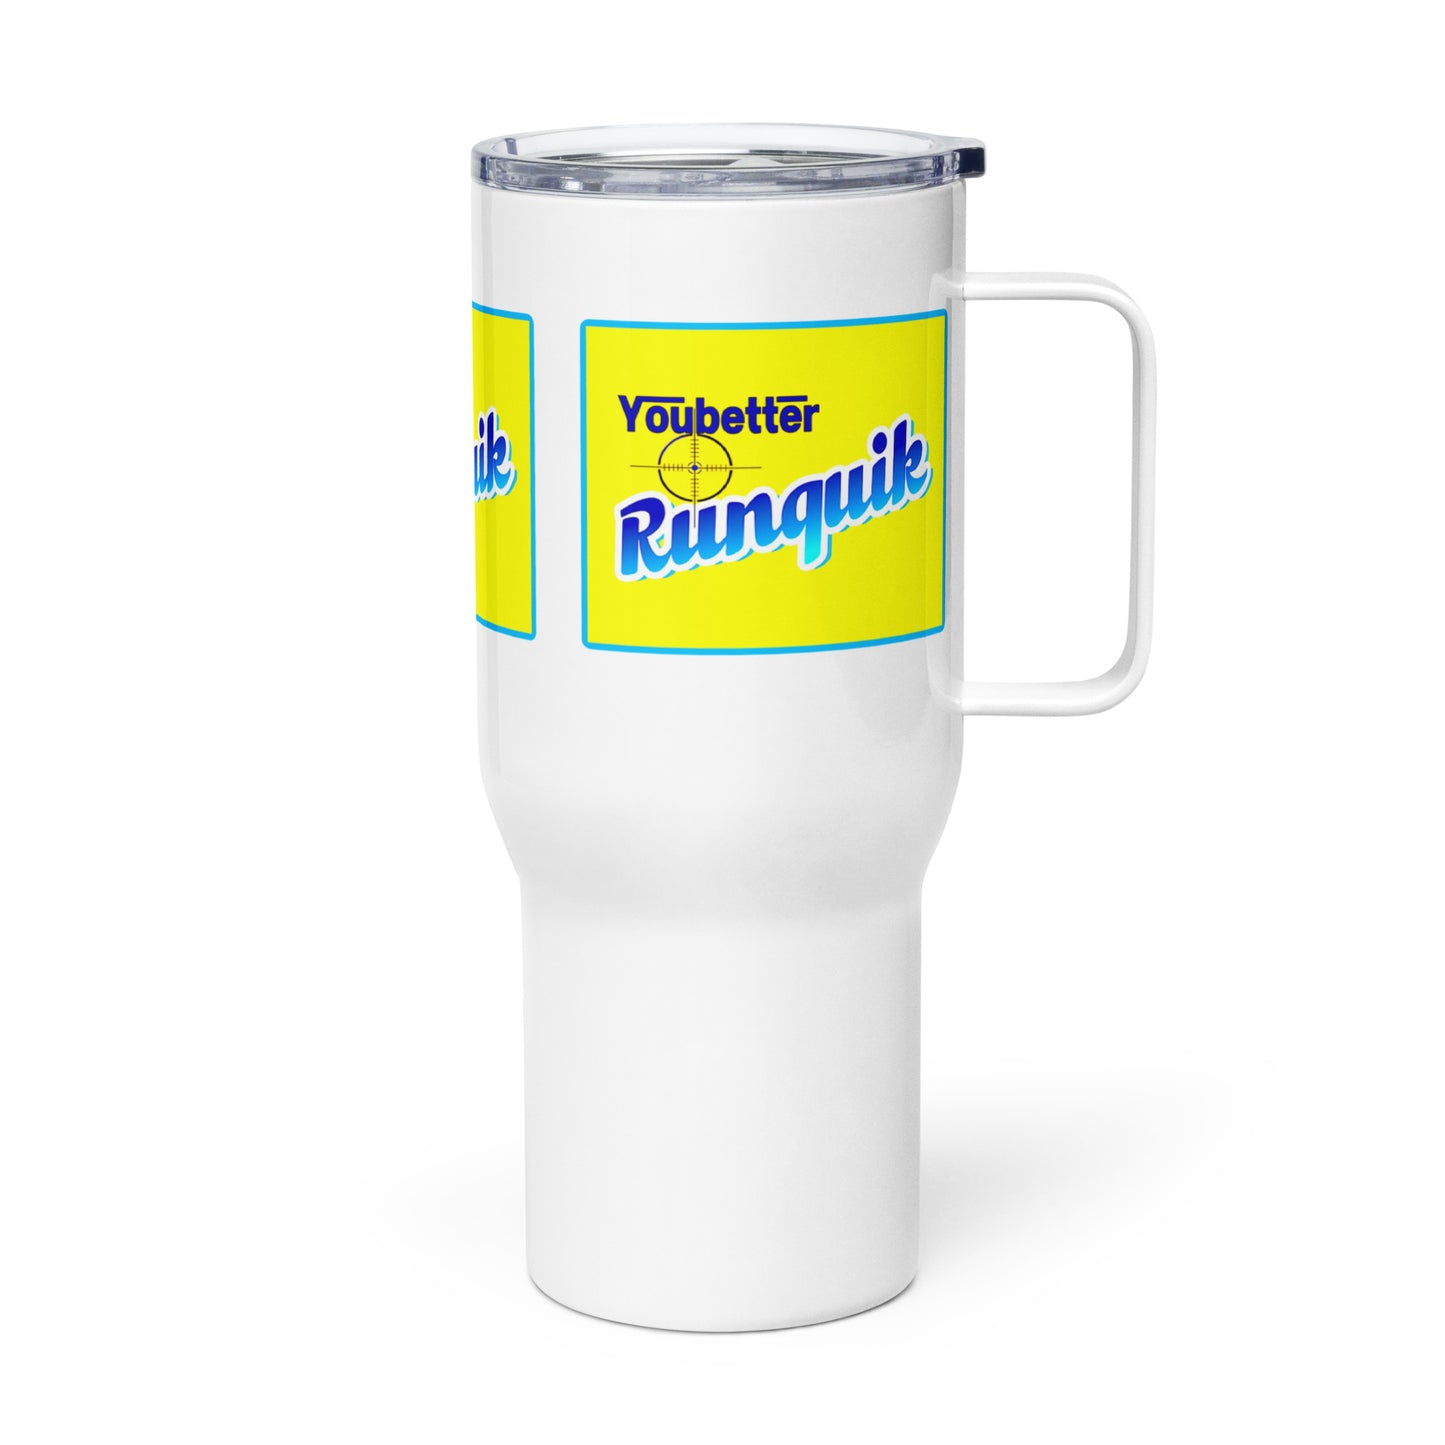 Youbetter Runquik Travel mug with a handle